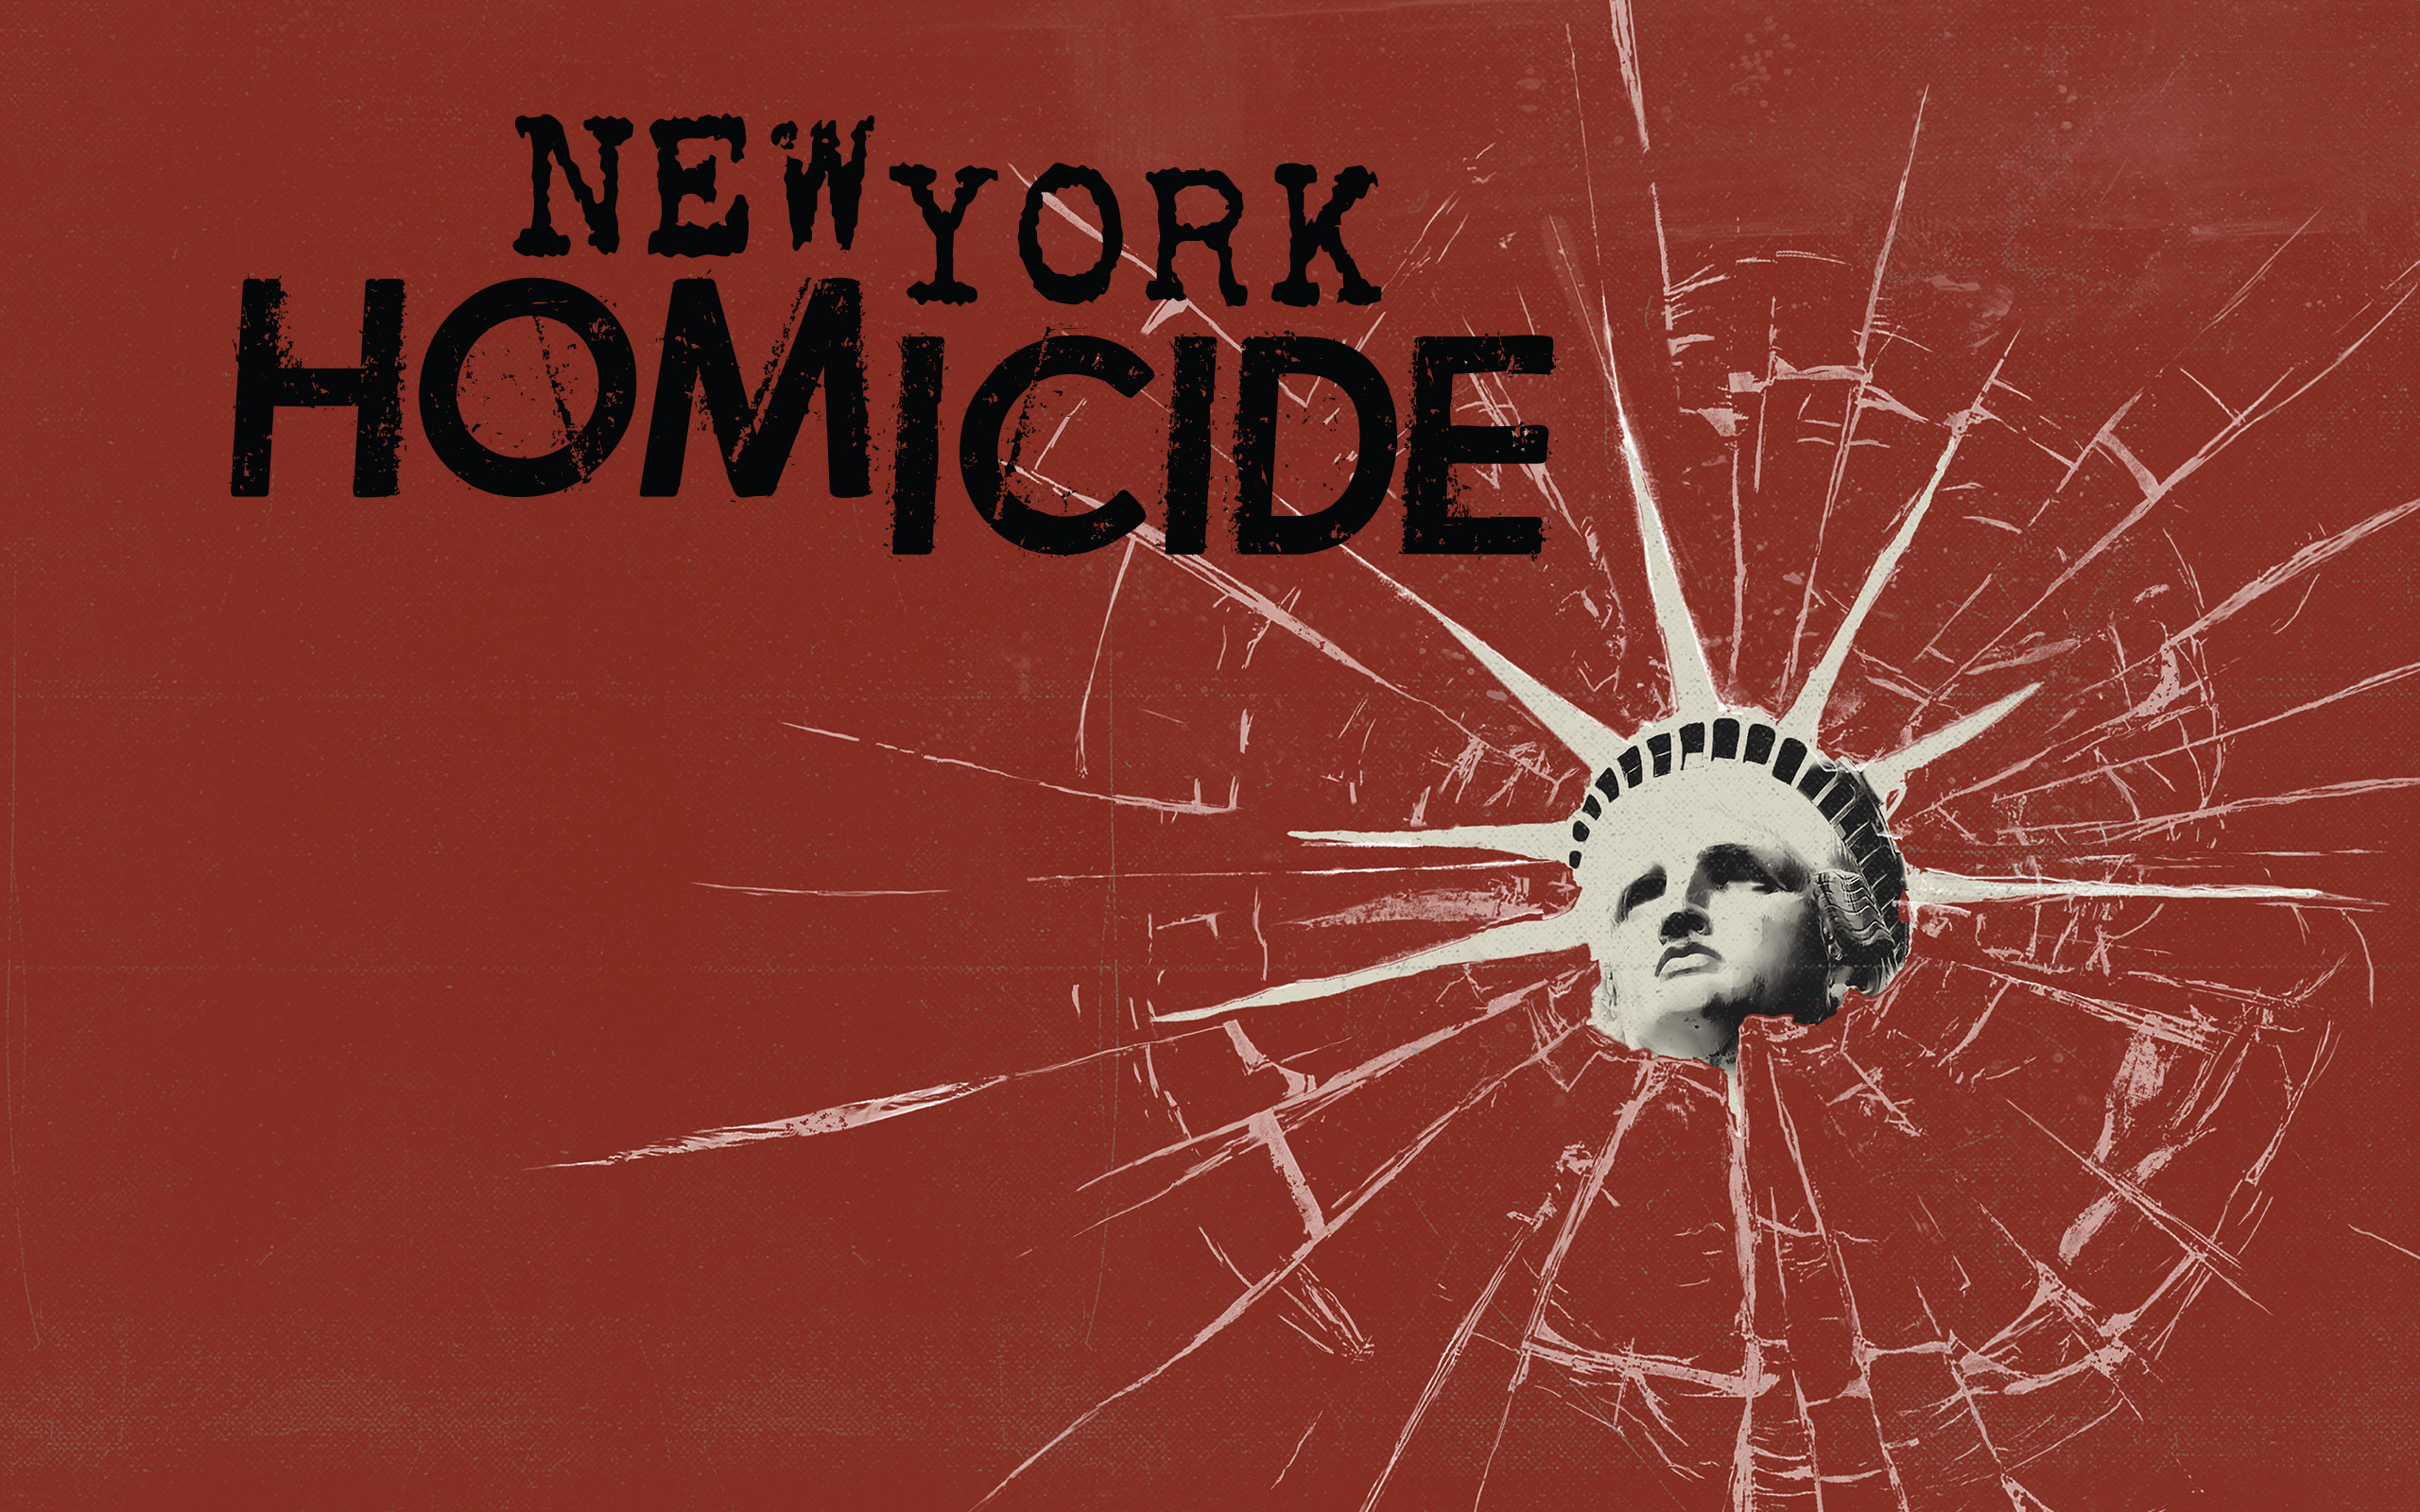 New York Homicide